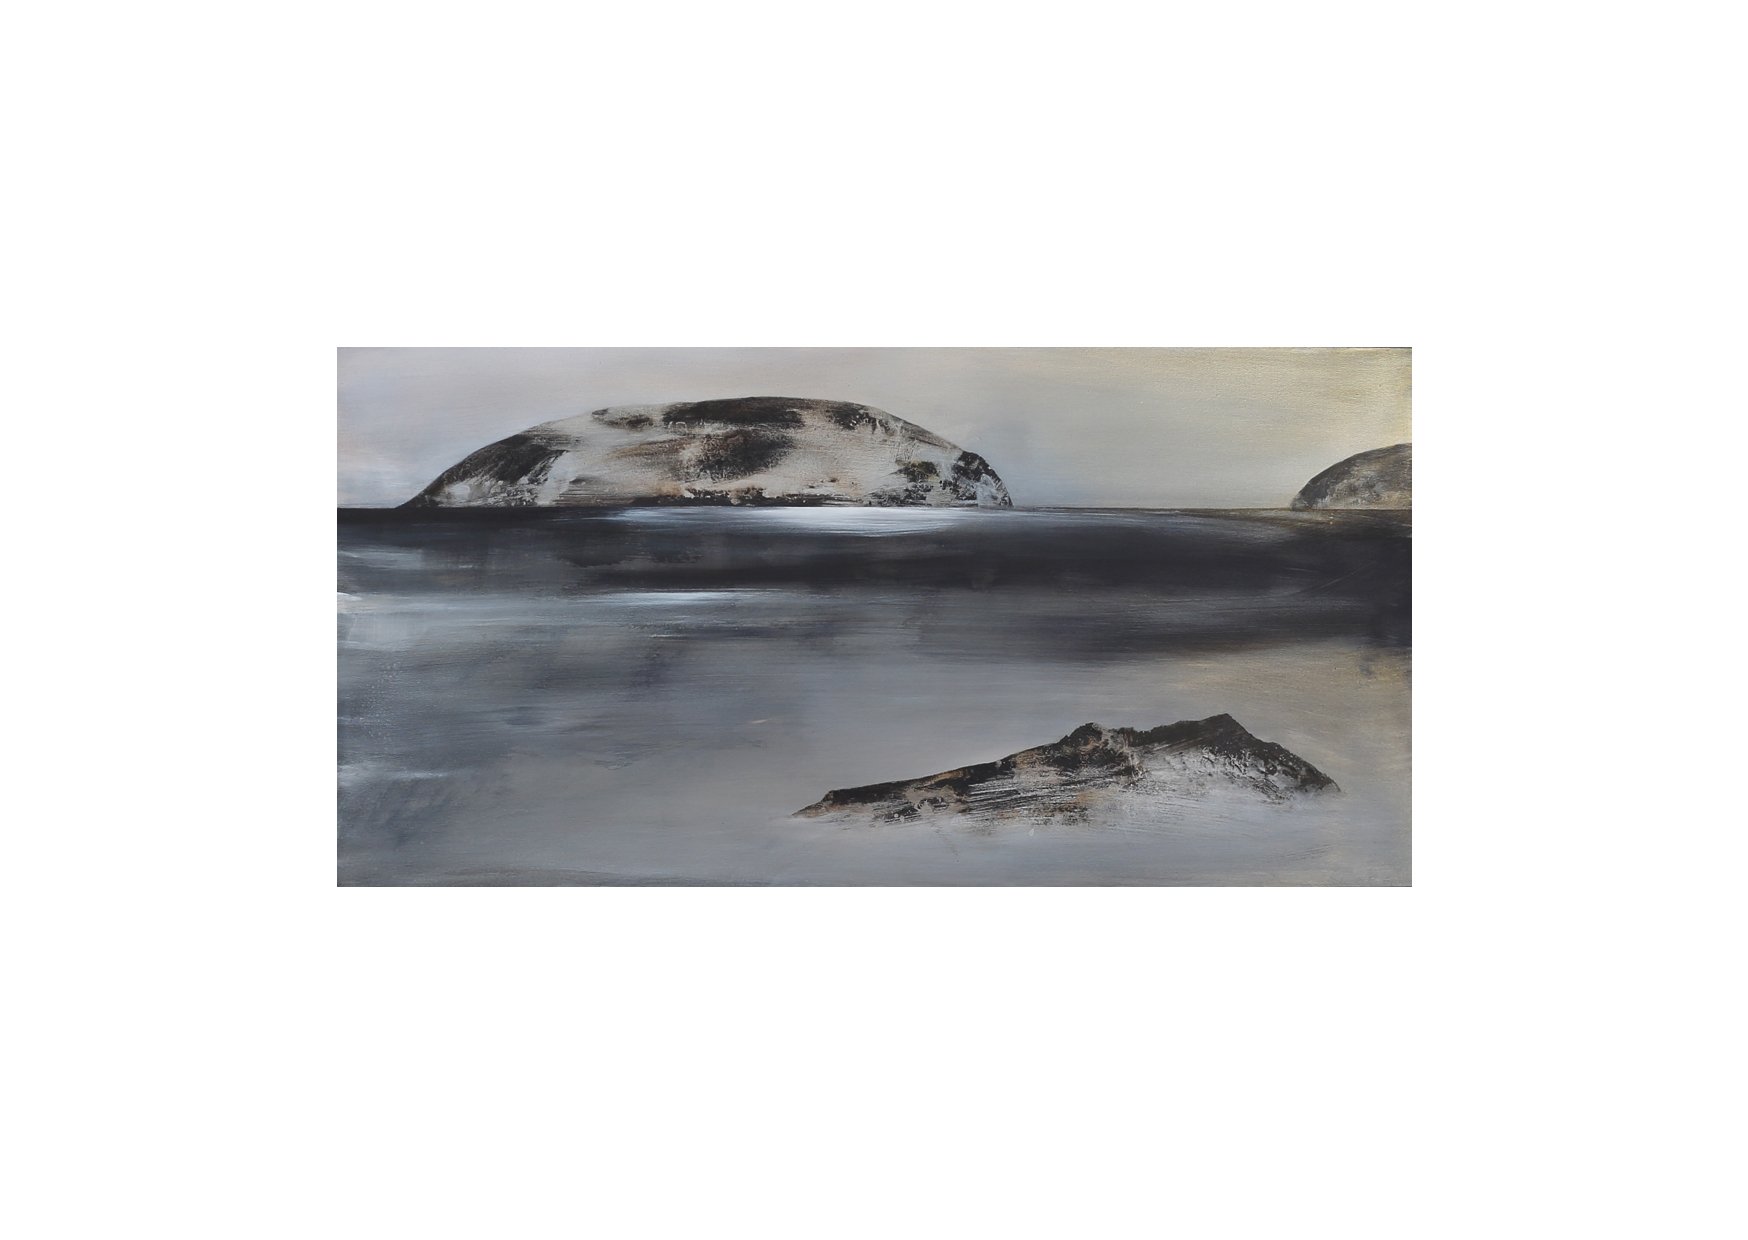  Wyn-Lyn TAN  Between Darkness and Light  2015 Acrylic on canvas H61 x W122 cm 